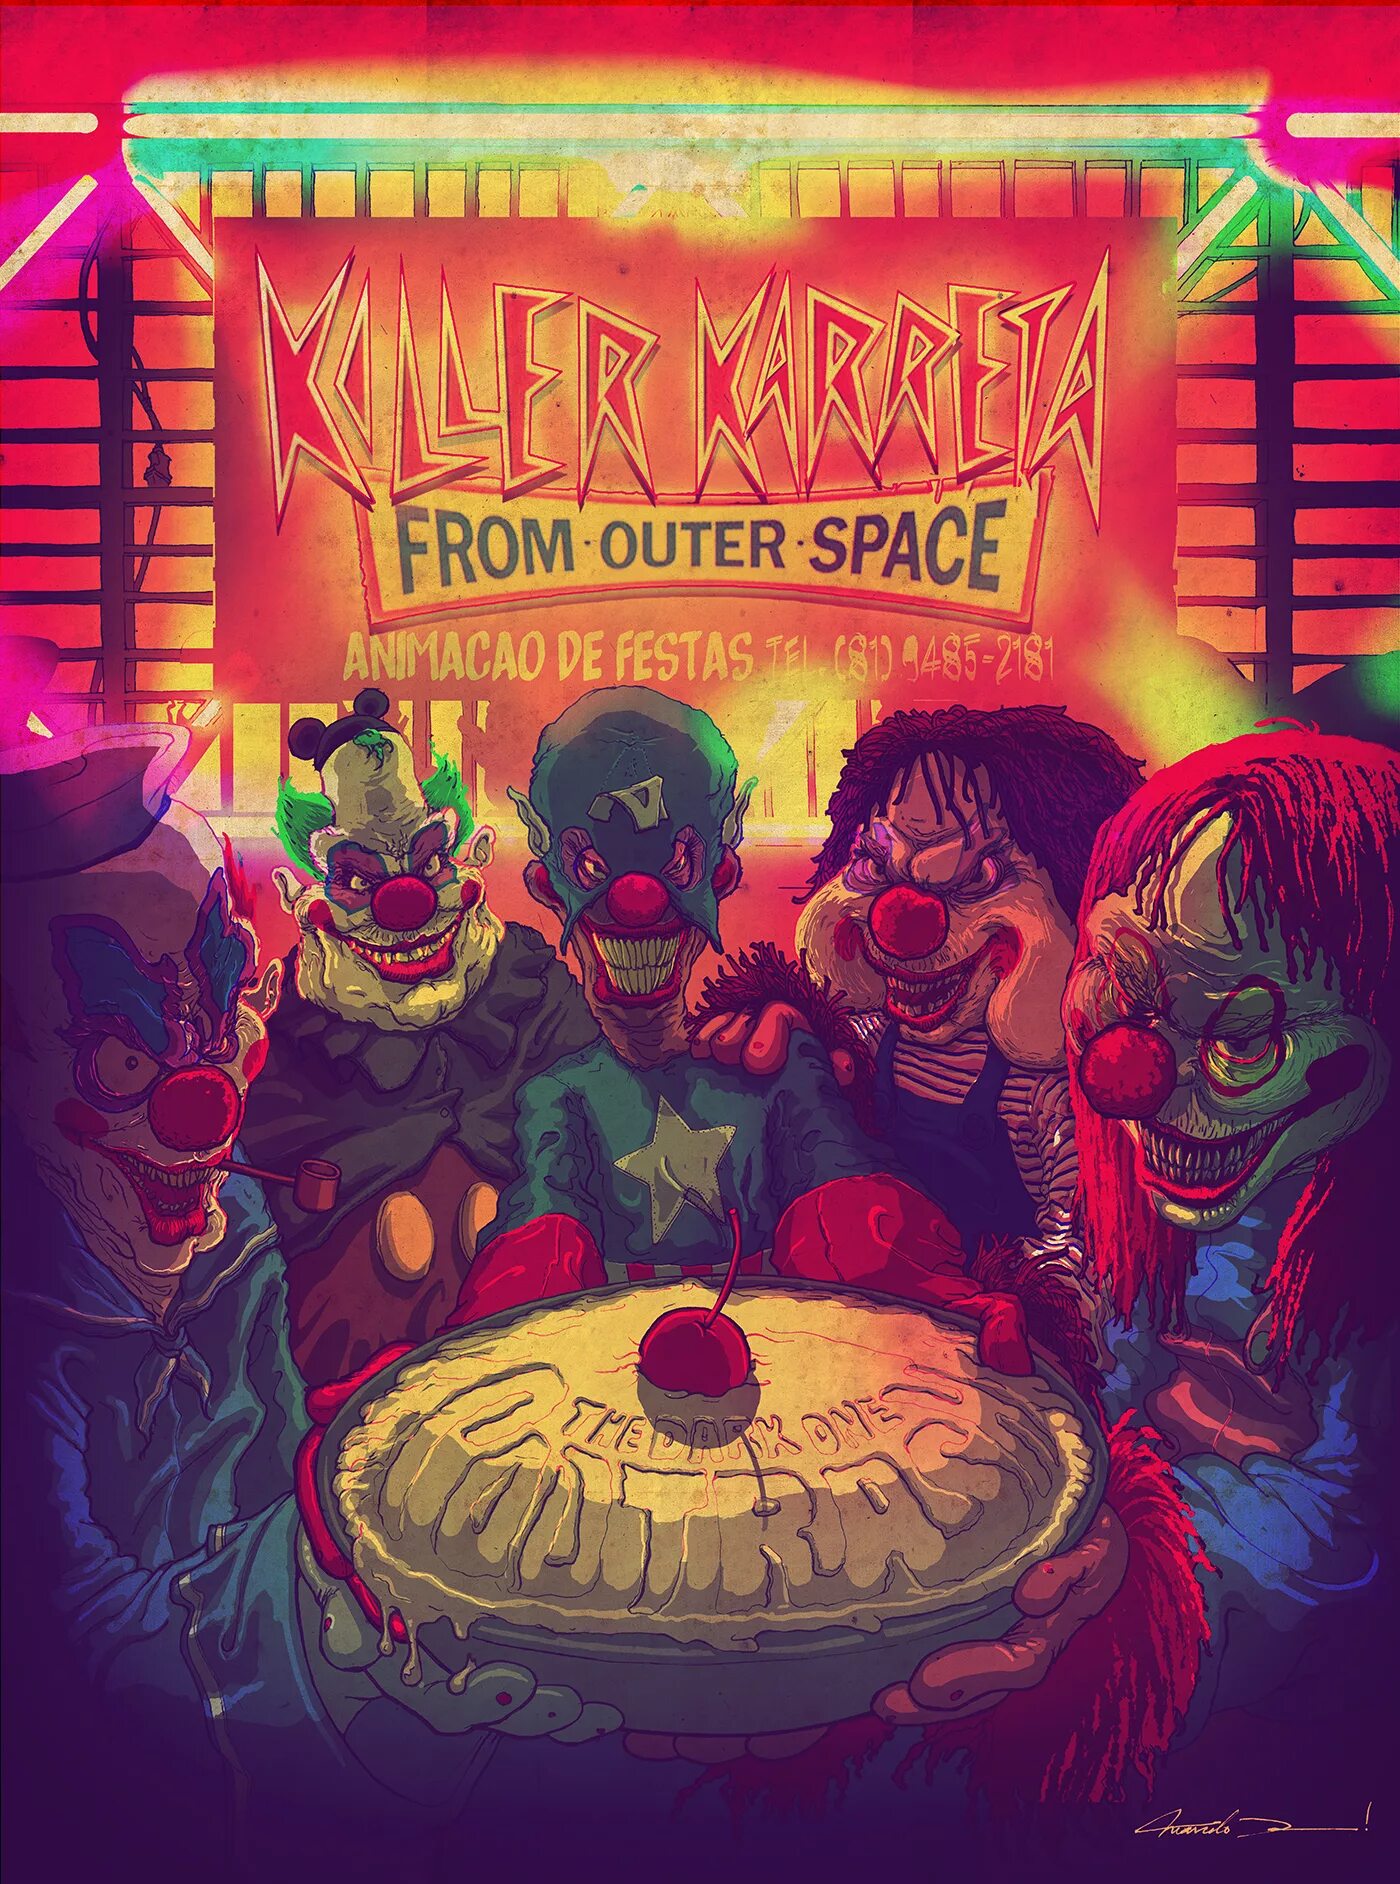 Killer klowns space